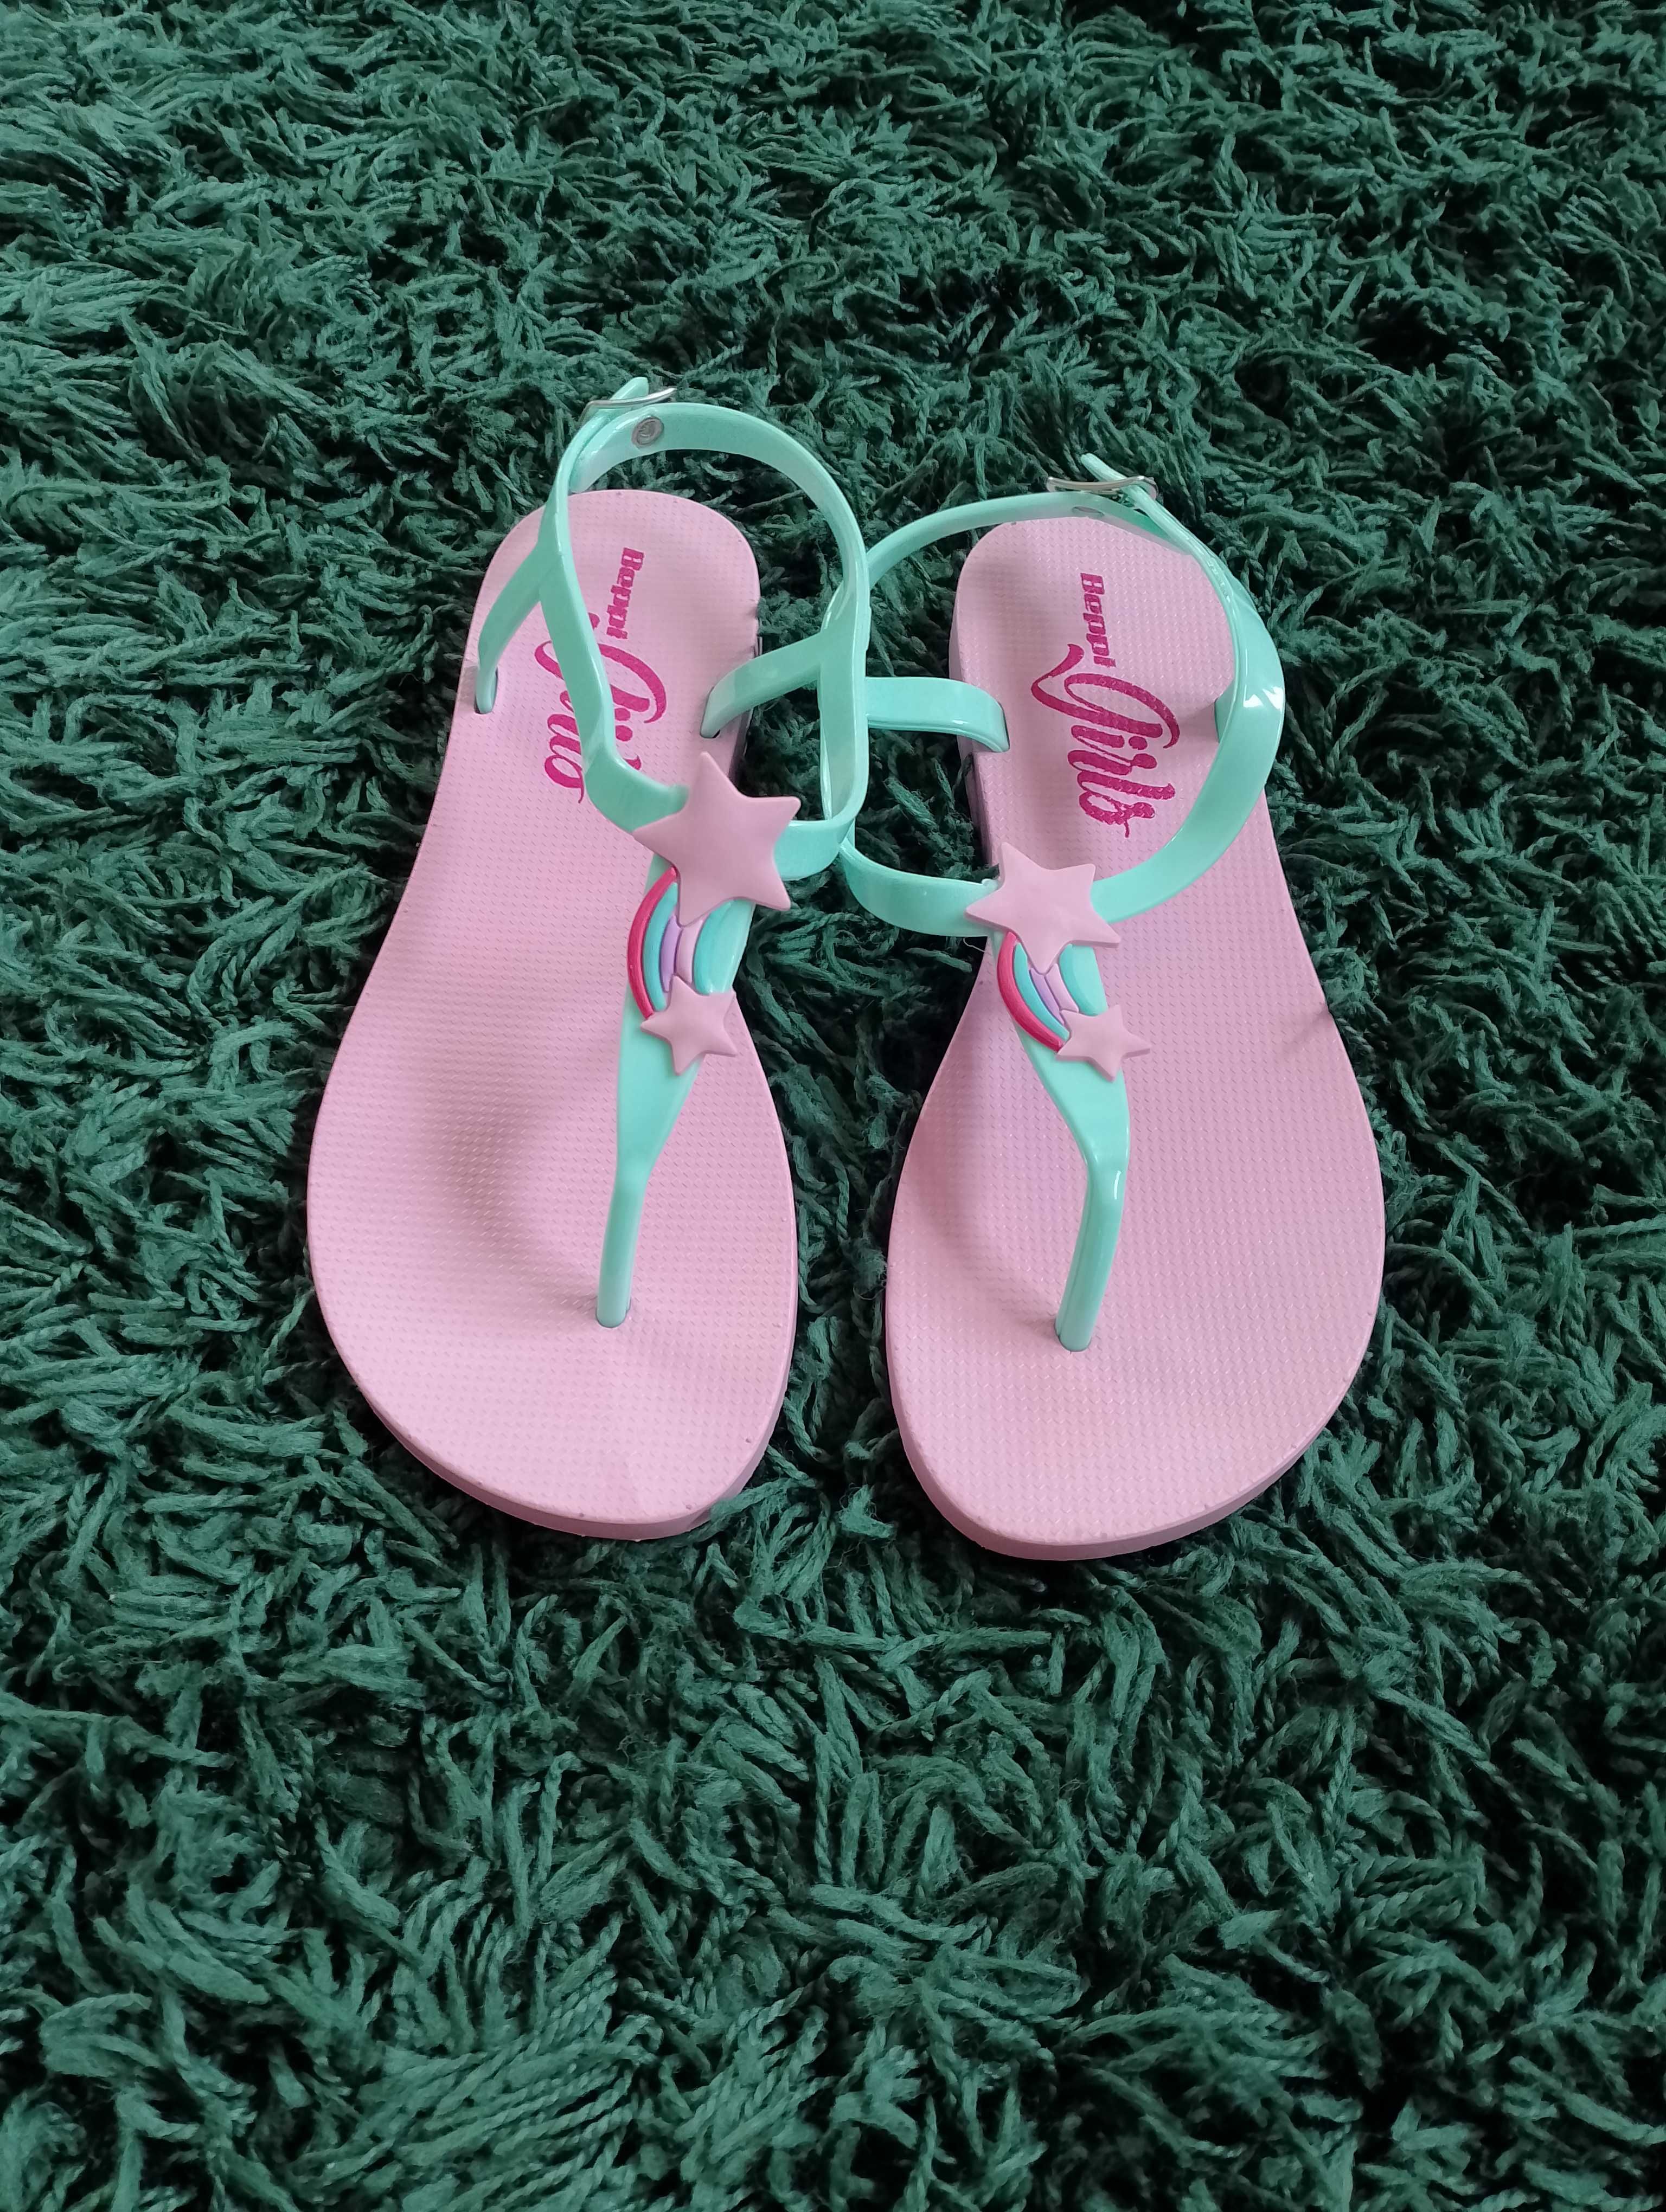 Детски сандалки за момиче